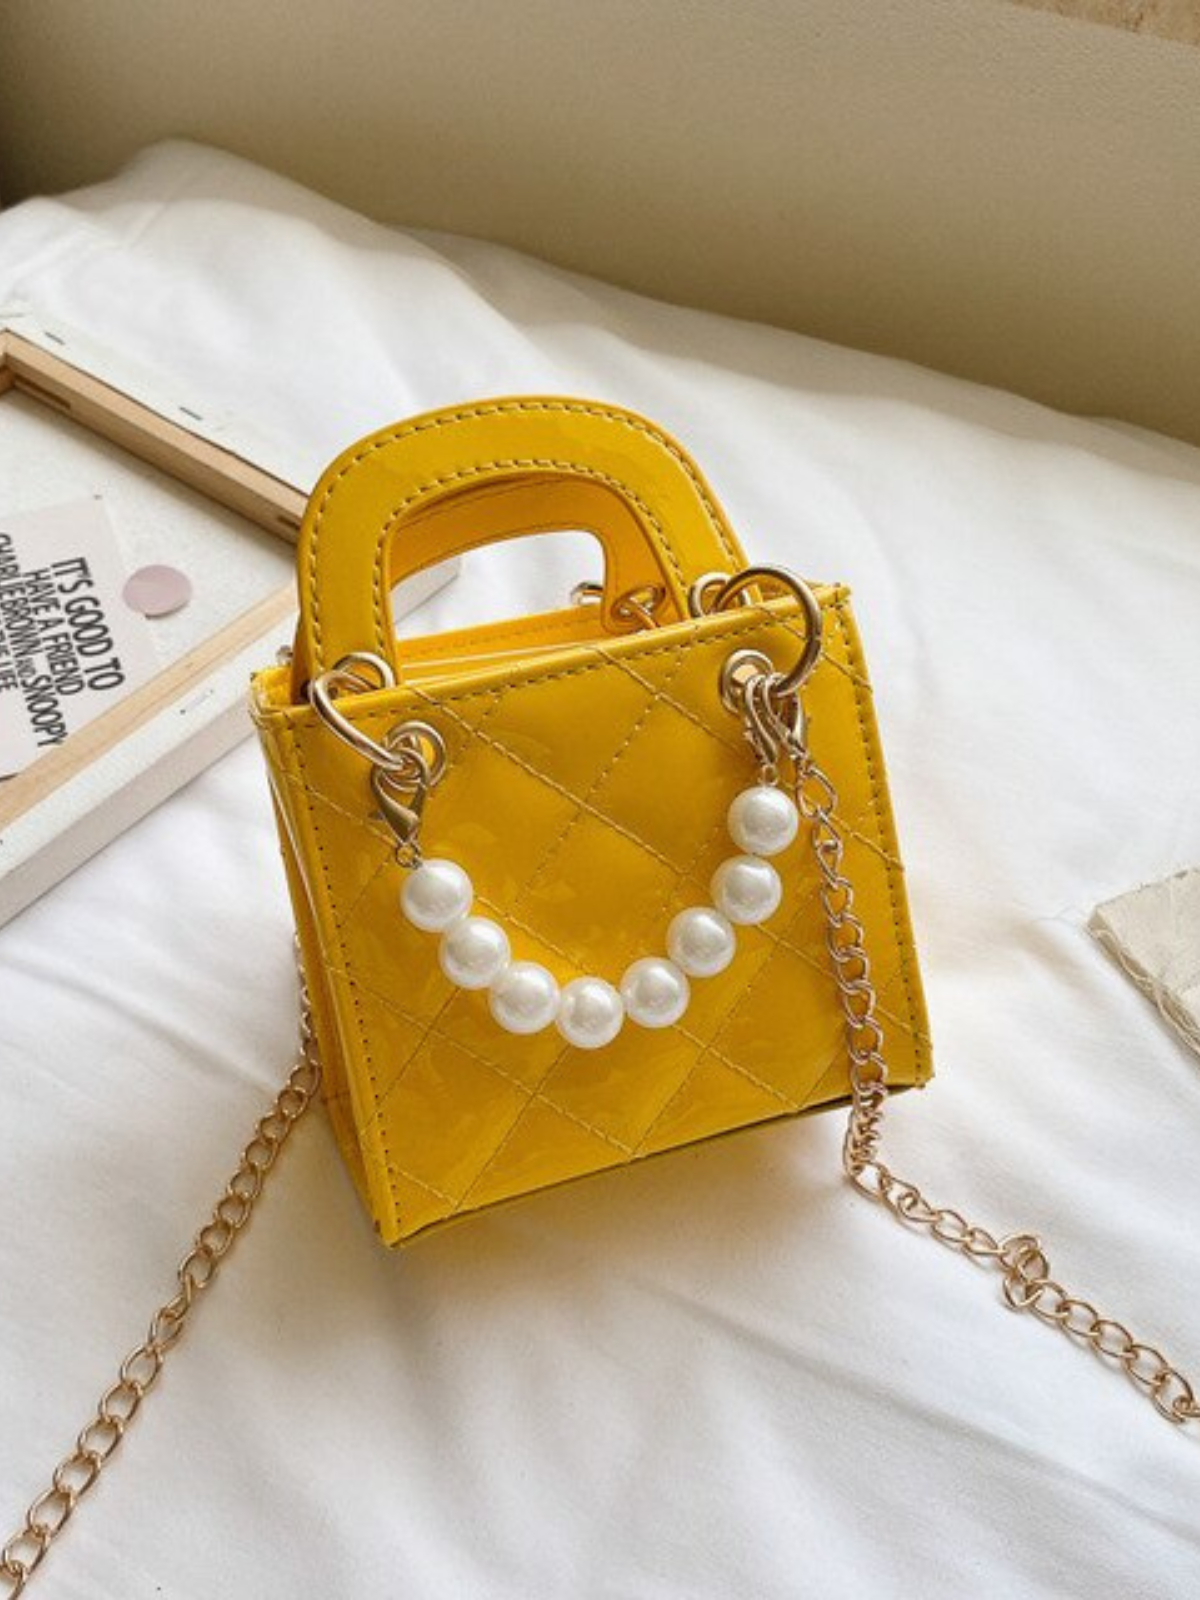 Mia Belle Girls Quilted Handbag | Girls Accessories